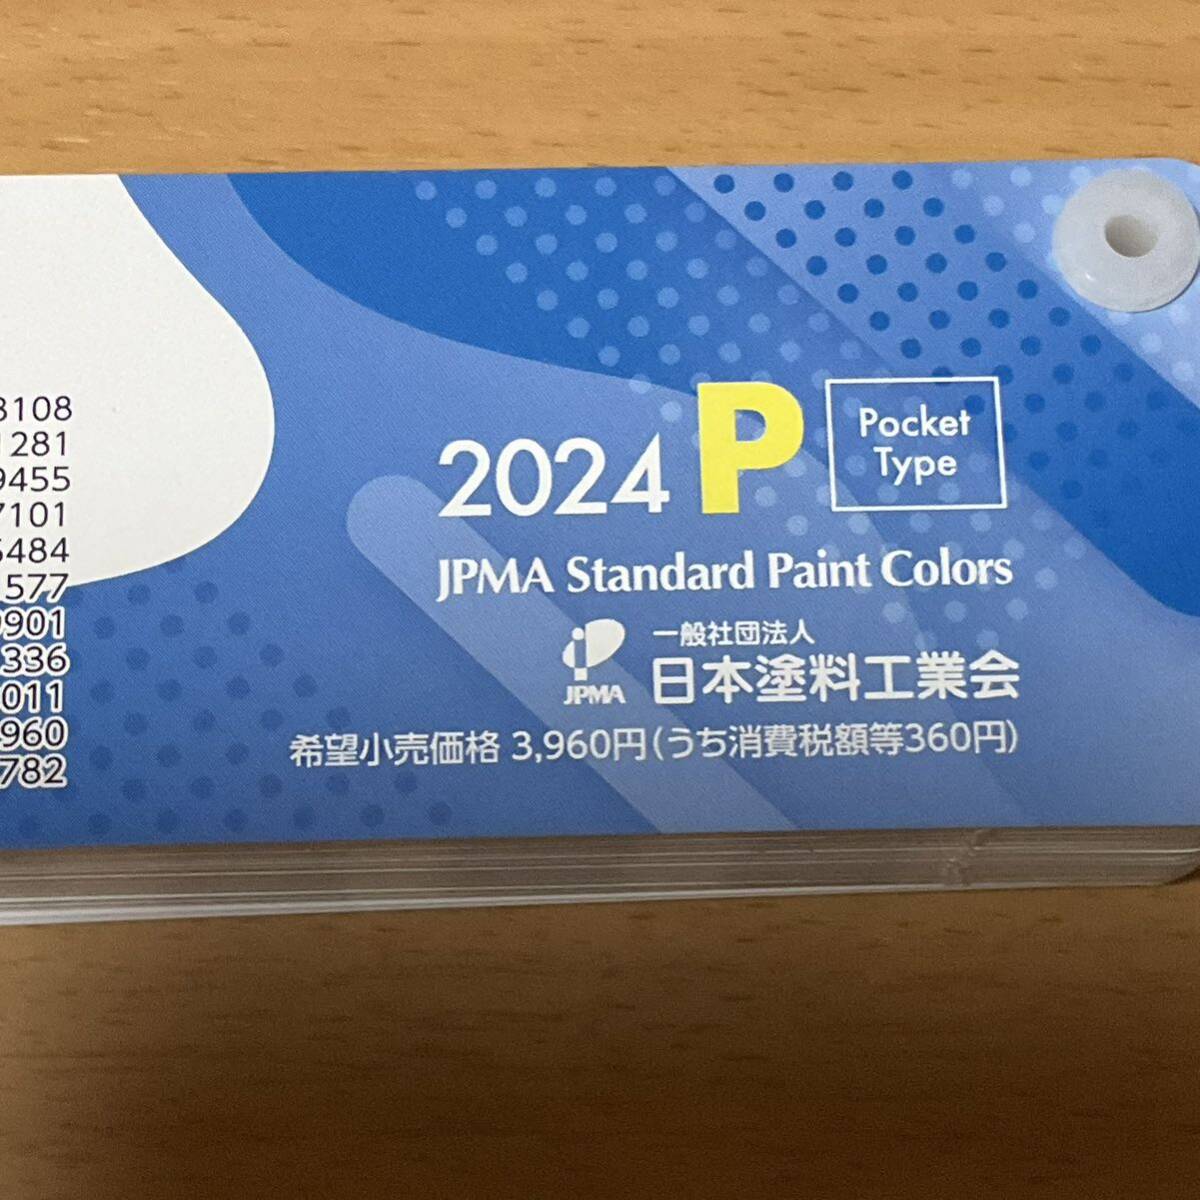  newest version Japan paints industry .2024 year P version paints for standard color sample . pocket version 